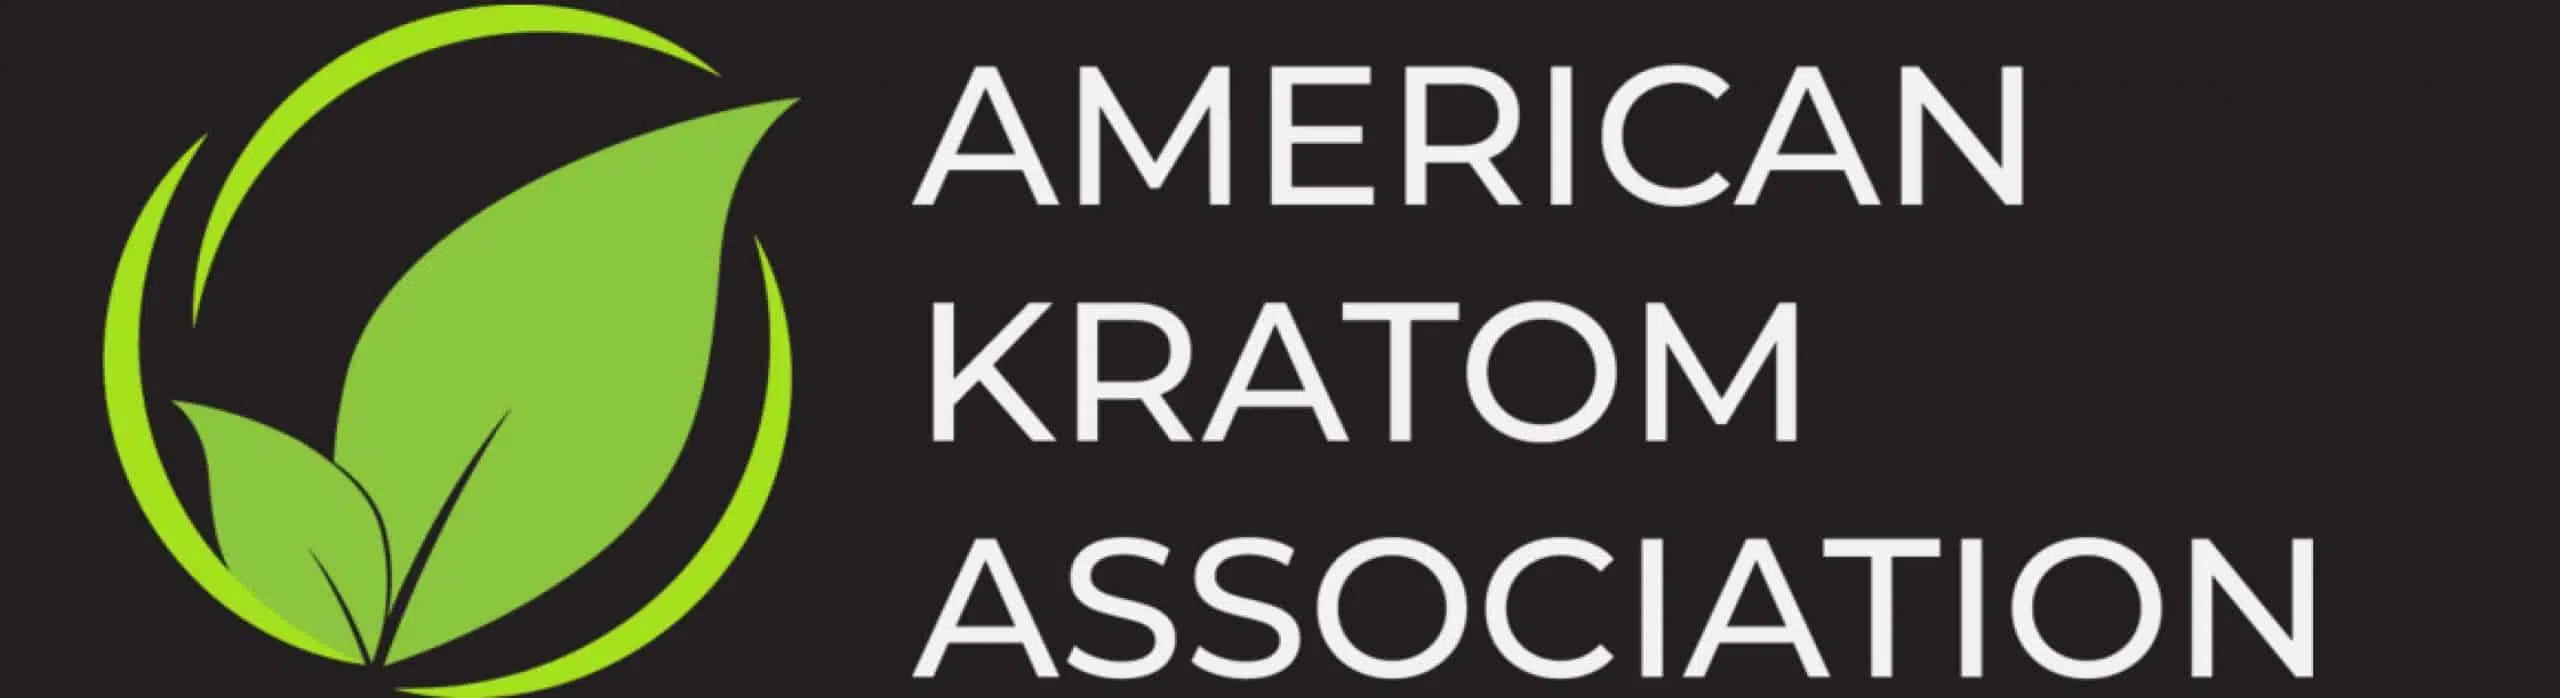 american kratom association logo